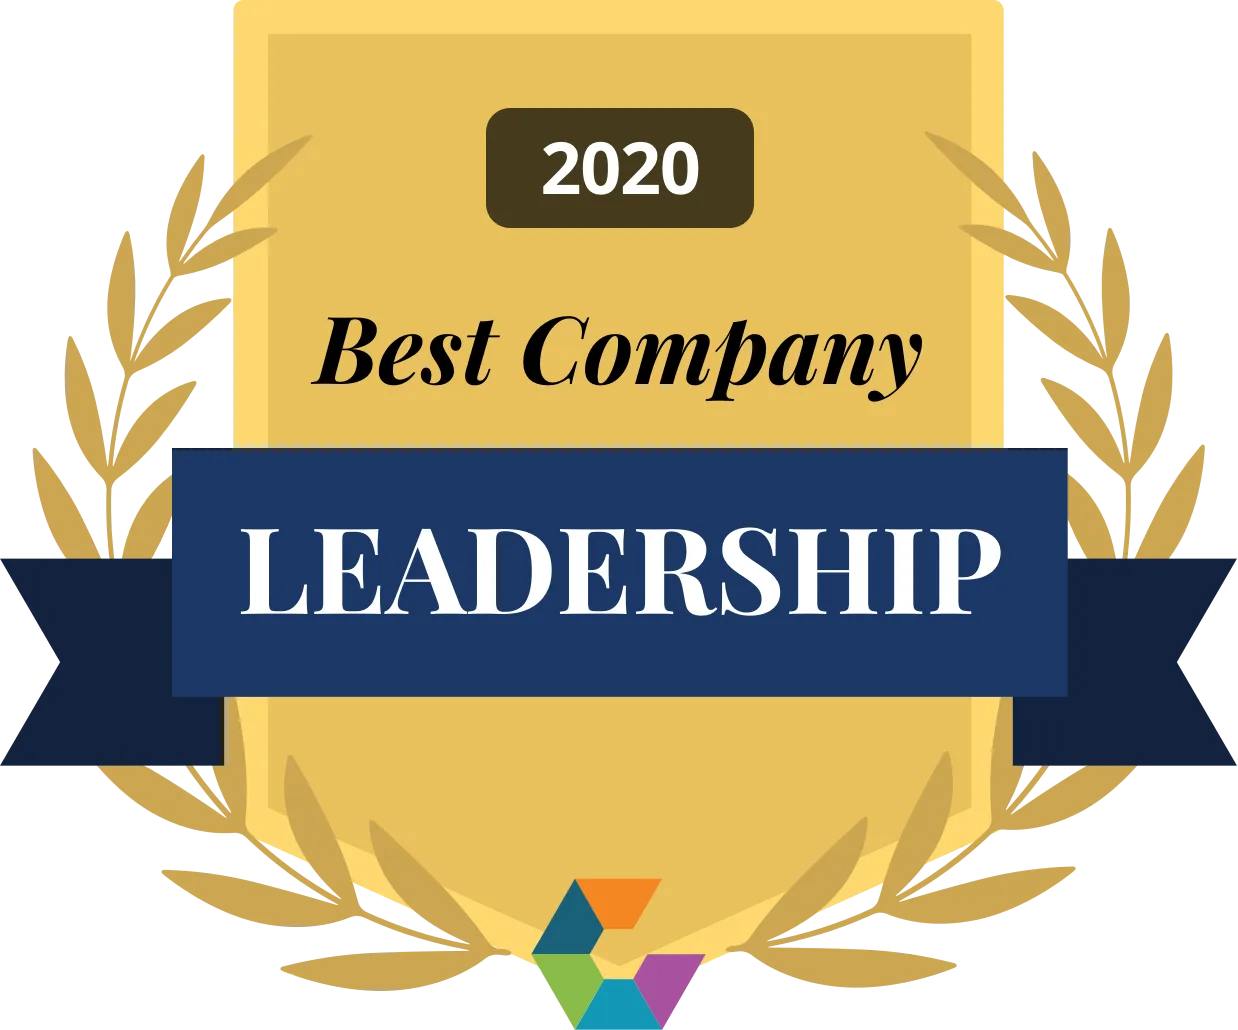 Comparably- Best Company Leadership 2020